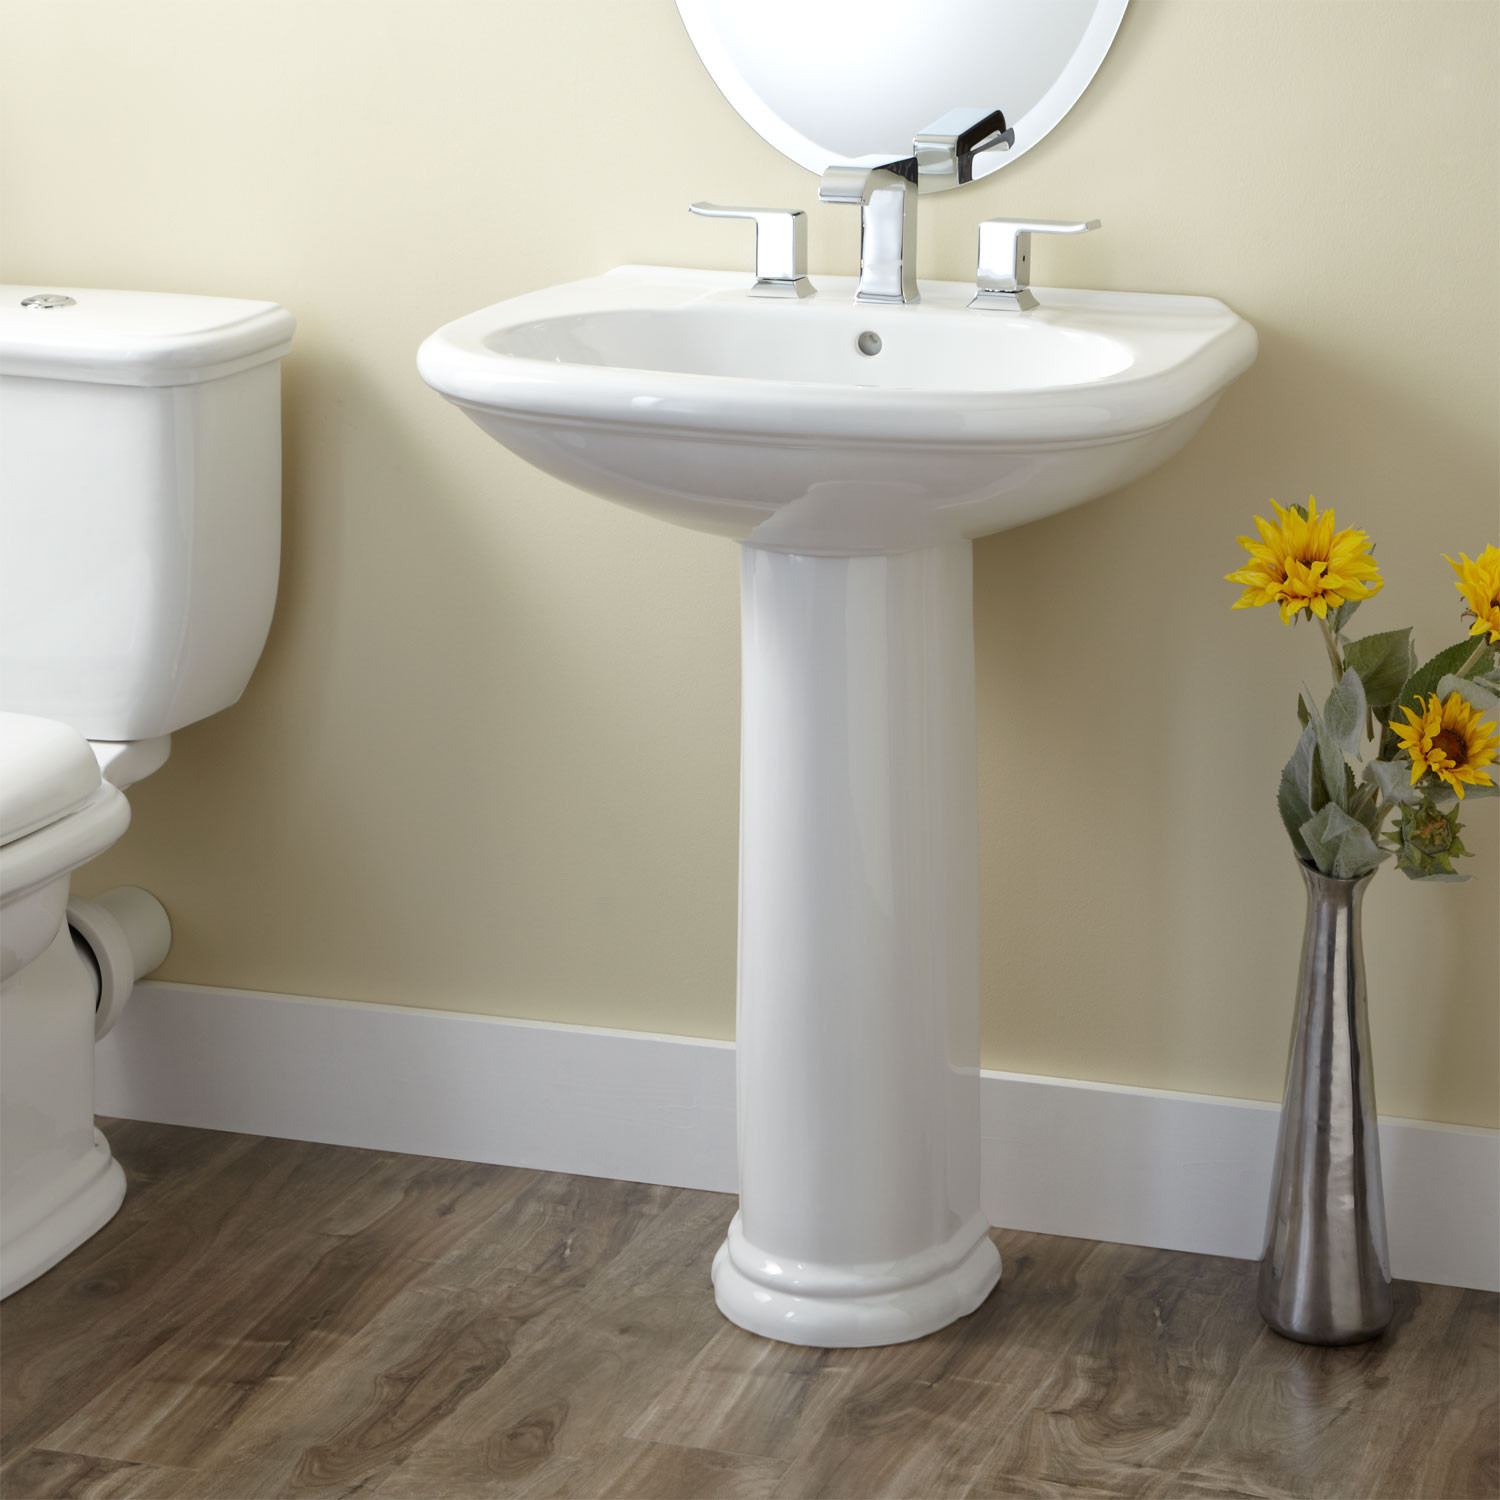 Best ideas about Pedestal Bathroom Sinks
. Save or Pin Kennard Porcelain Pedestal Sink Bathroom Sinks Bathroom Now.